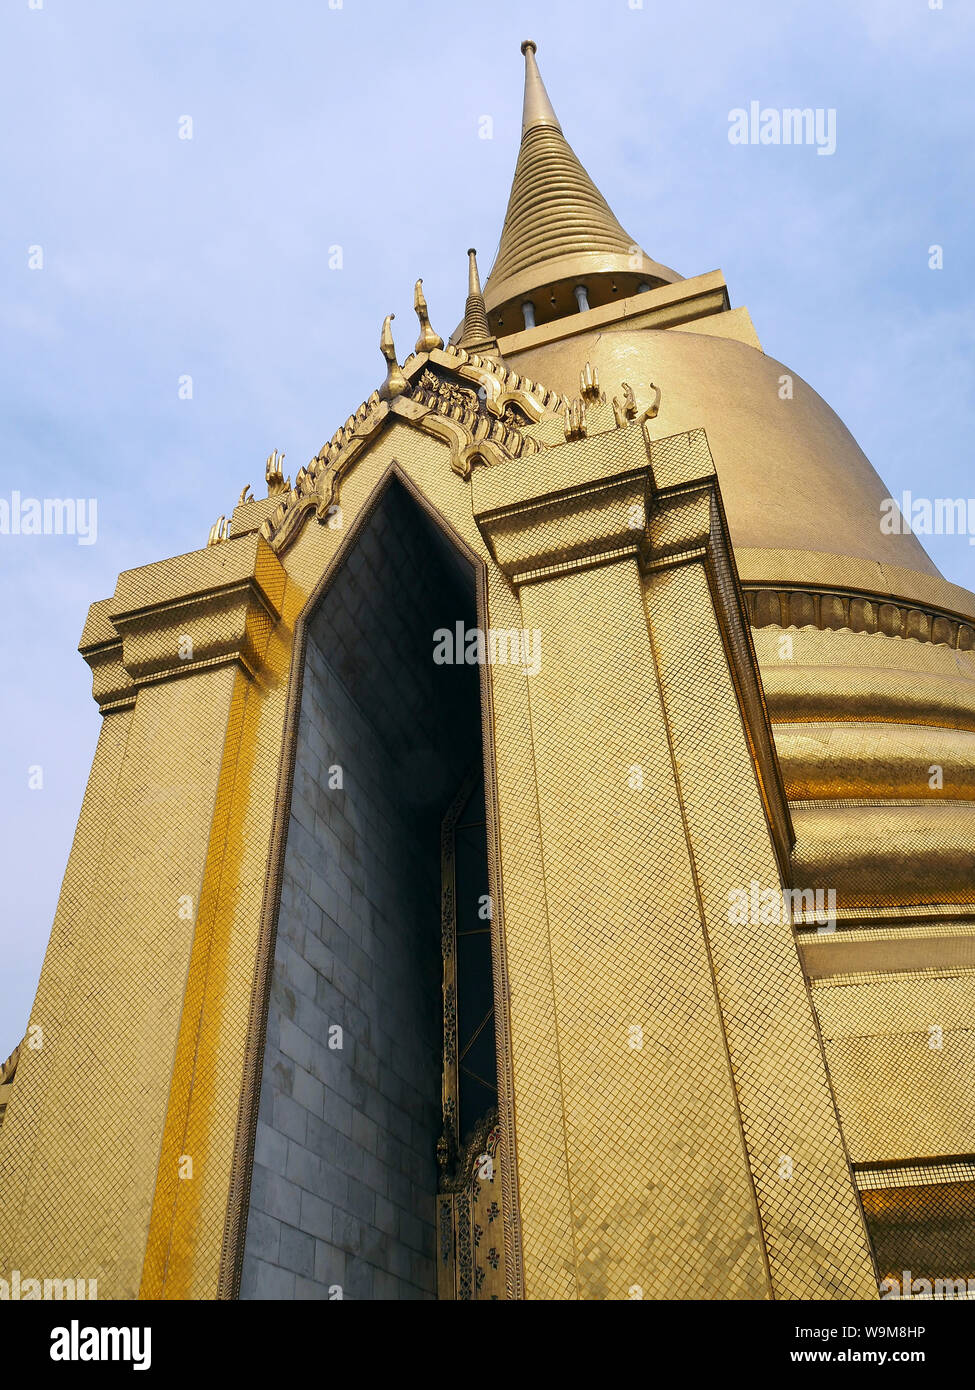 Phra Sri Rattana Chedi, Wat Phra Kaew, Bangkok, Krung Thep, Thailande, Asie Banque D'Images